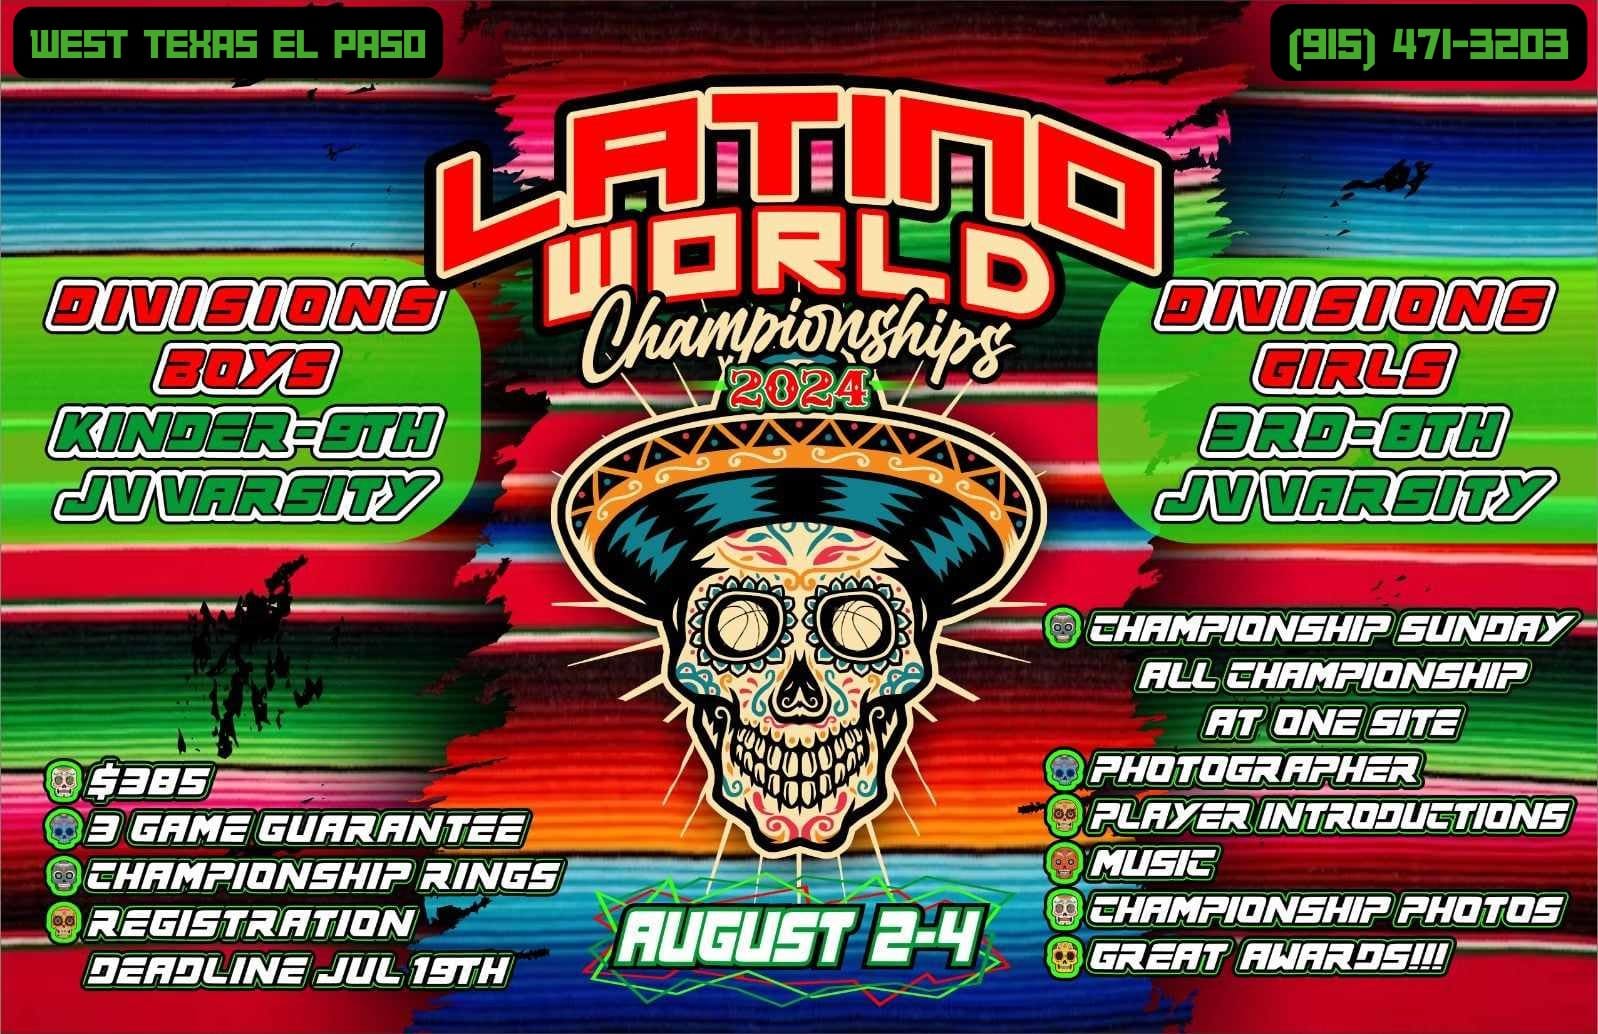 Latino World Championships